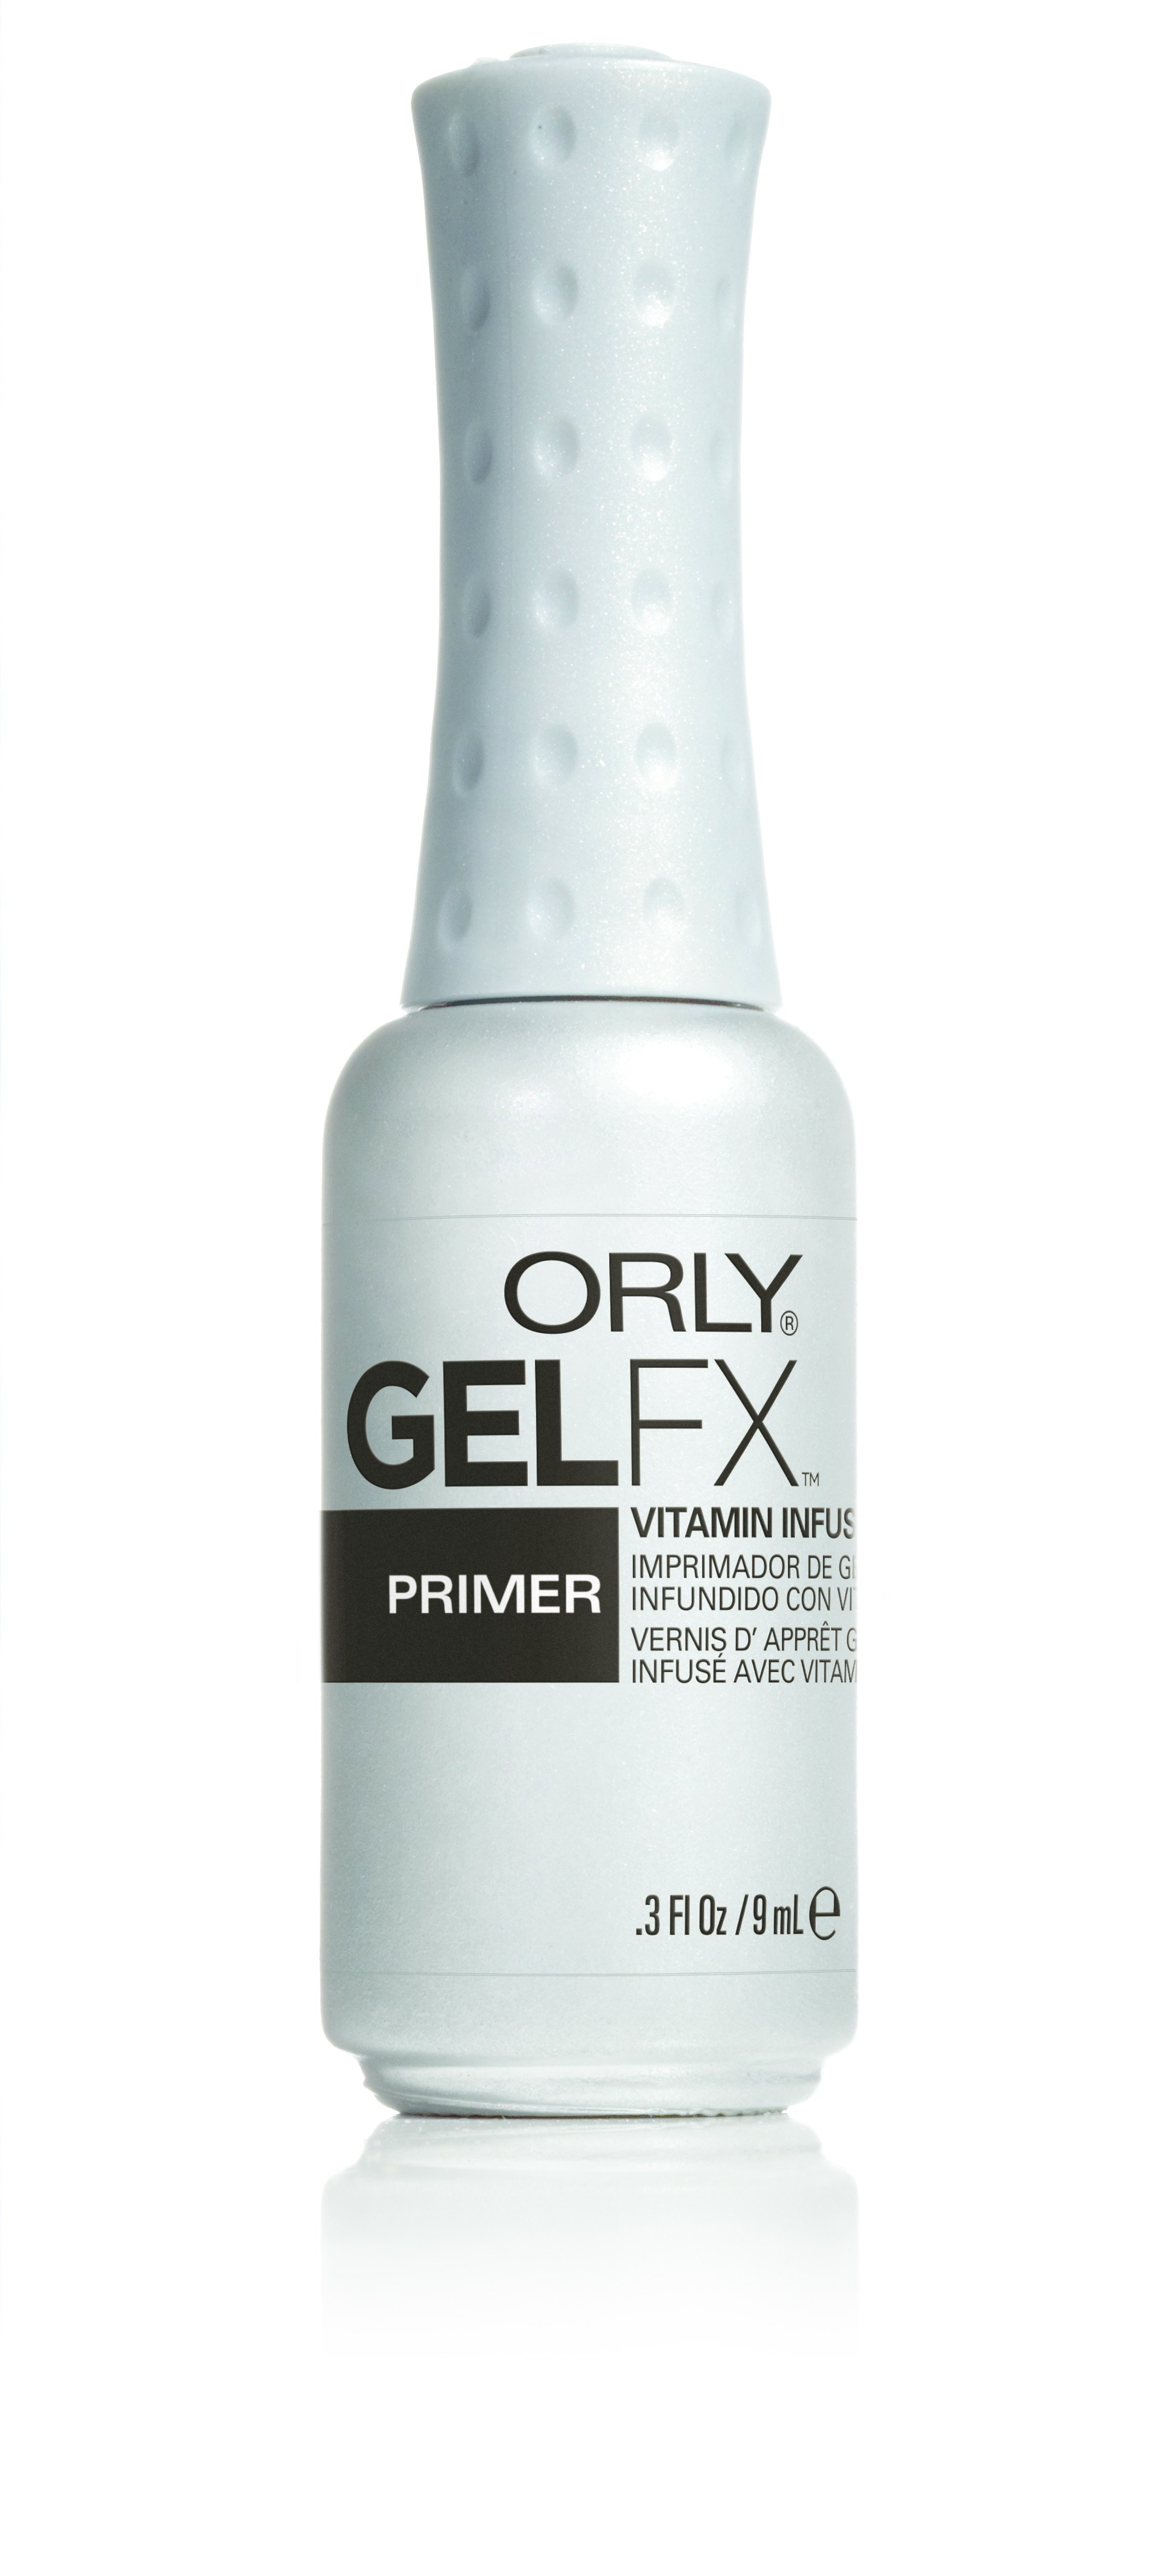 Базы, сушки, закрепители:  Праймер для гель-маникюра ORLY Gel Fx Primer